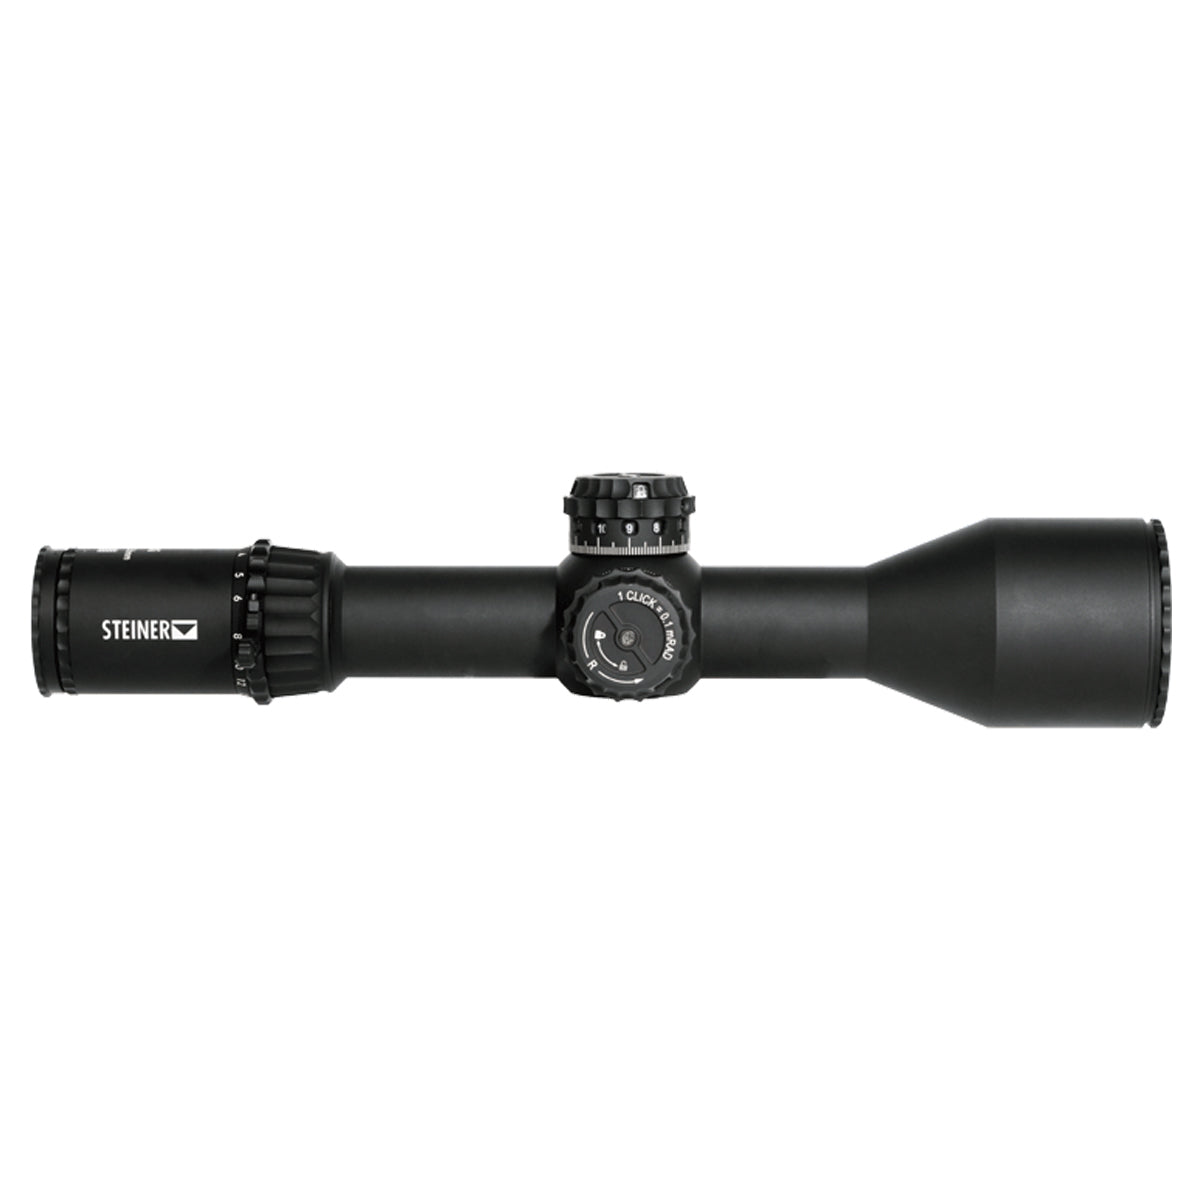 Steiner Optics T6Xi 3-18x56mm SCR2 Riflescope in  by GOHUNT | Steiner Optics - GOHUNT Shop